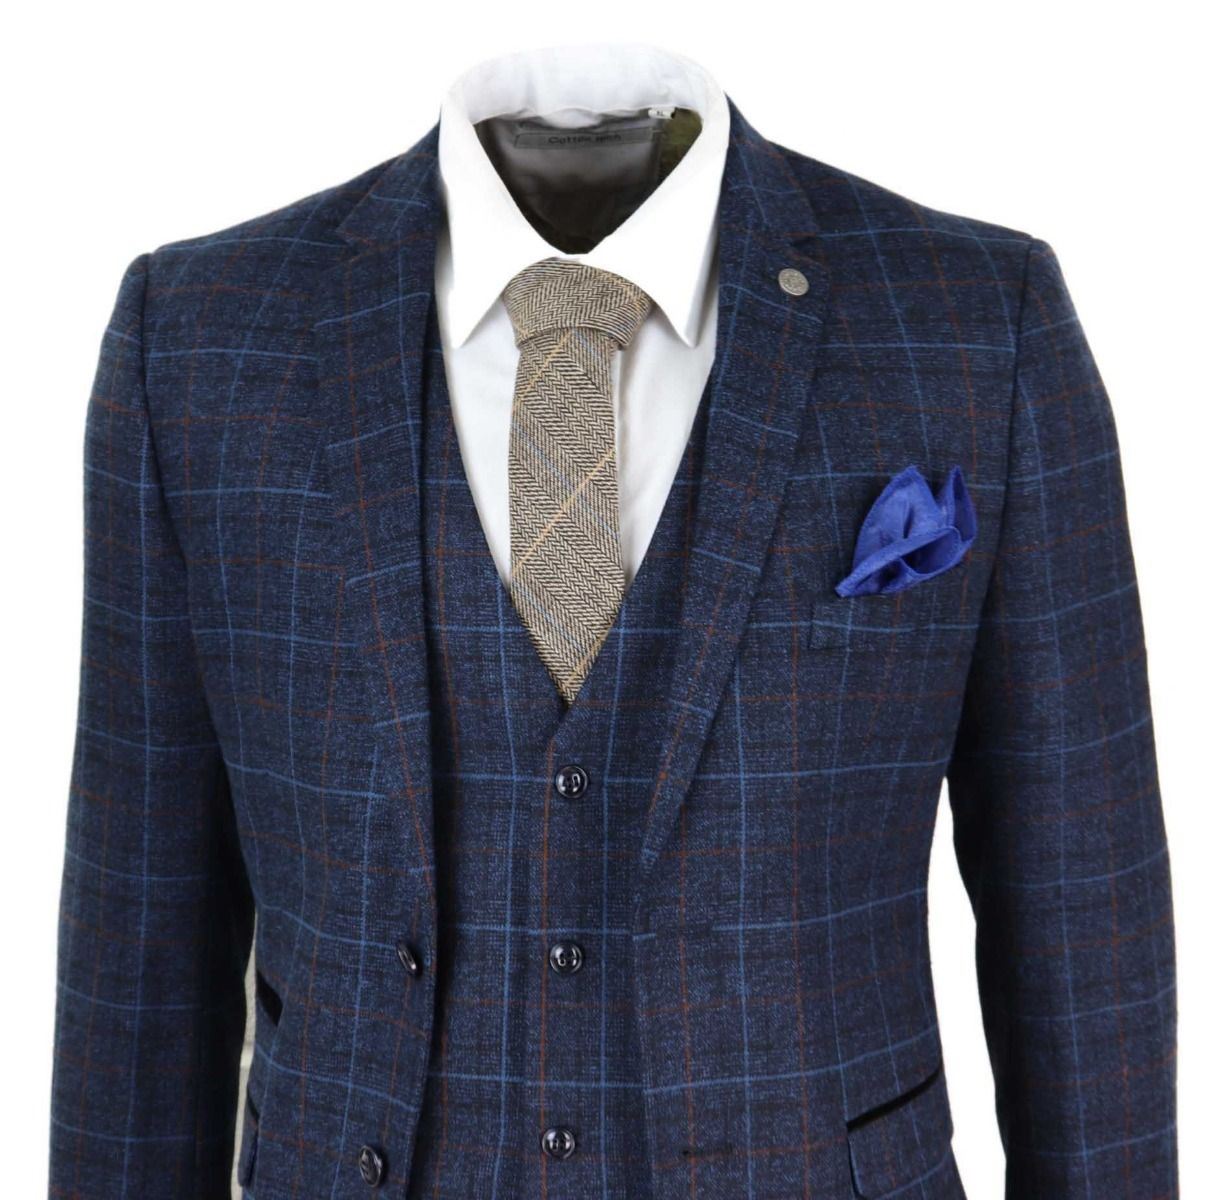 Mens 3 Piece Navy Blue Tweed Check Vintage Suit